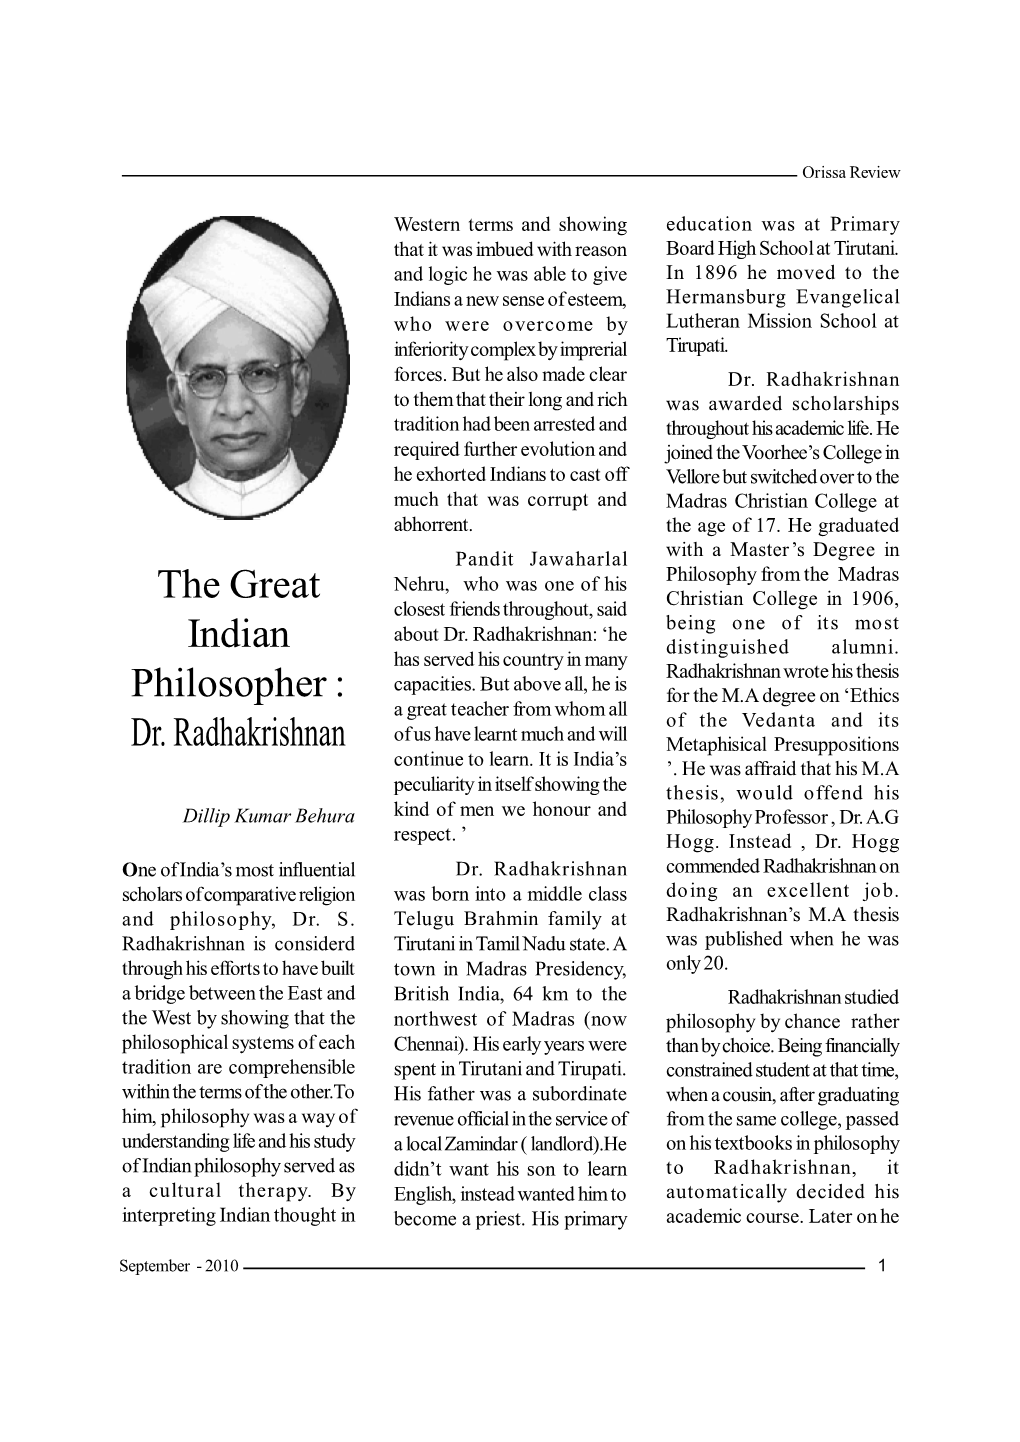 The Great Indian Philosopher : Dr. Radhakrishnan Dillip Kumar Behura ...1